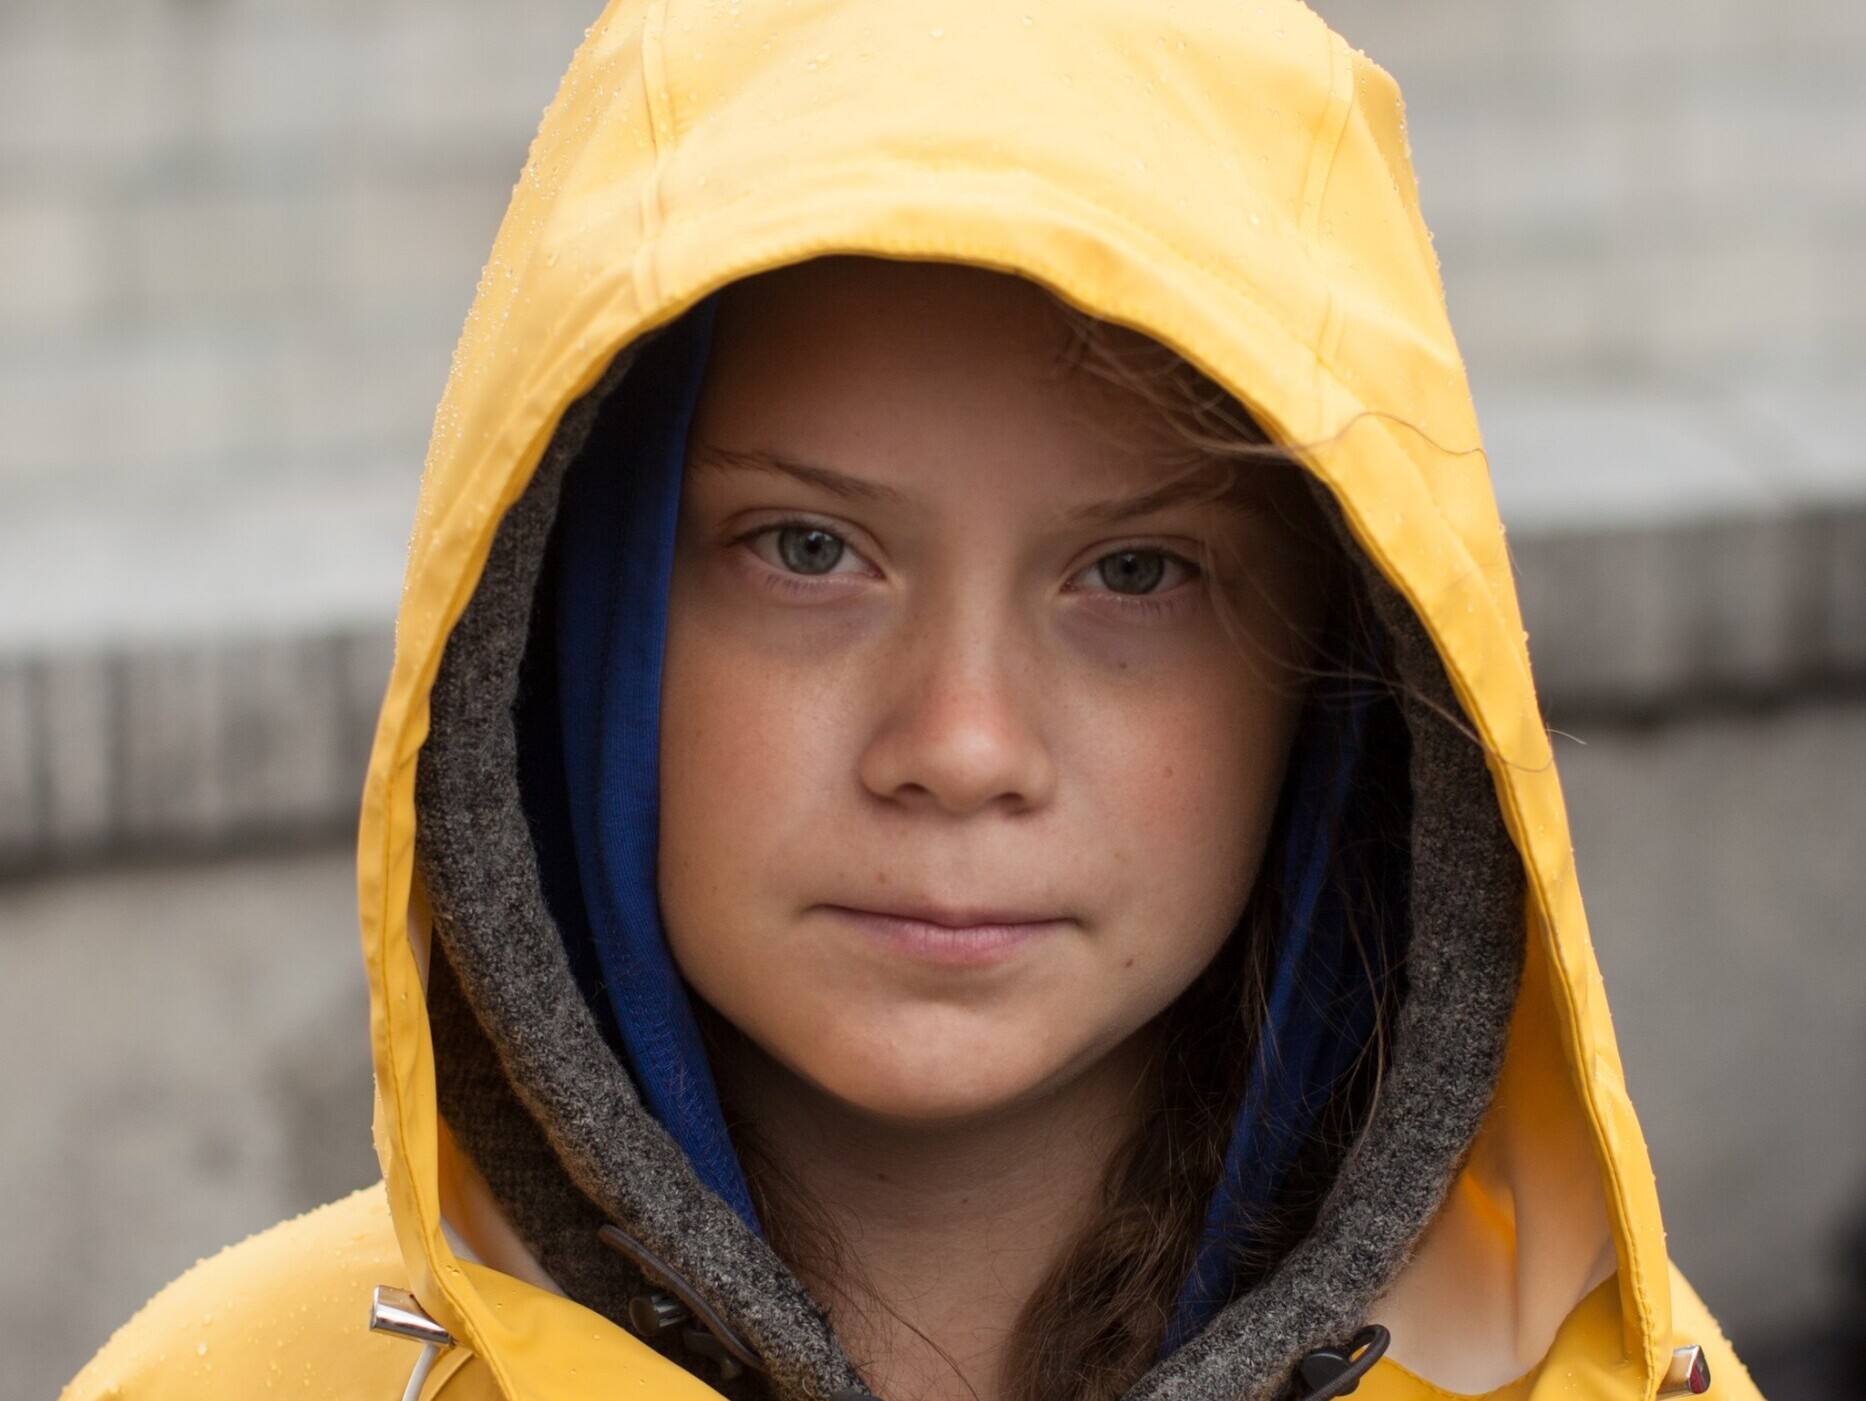 "Greta Thunberg 01 (cropped)" by Anders Hellberg is licensed under CC BY-SA 4.0.